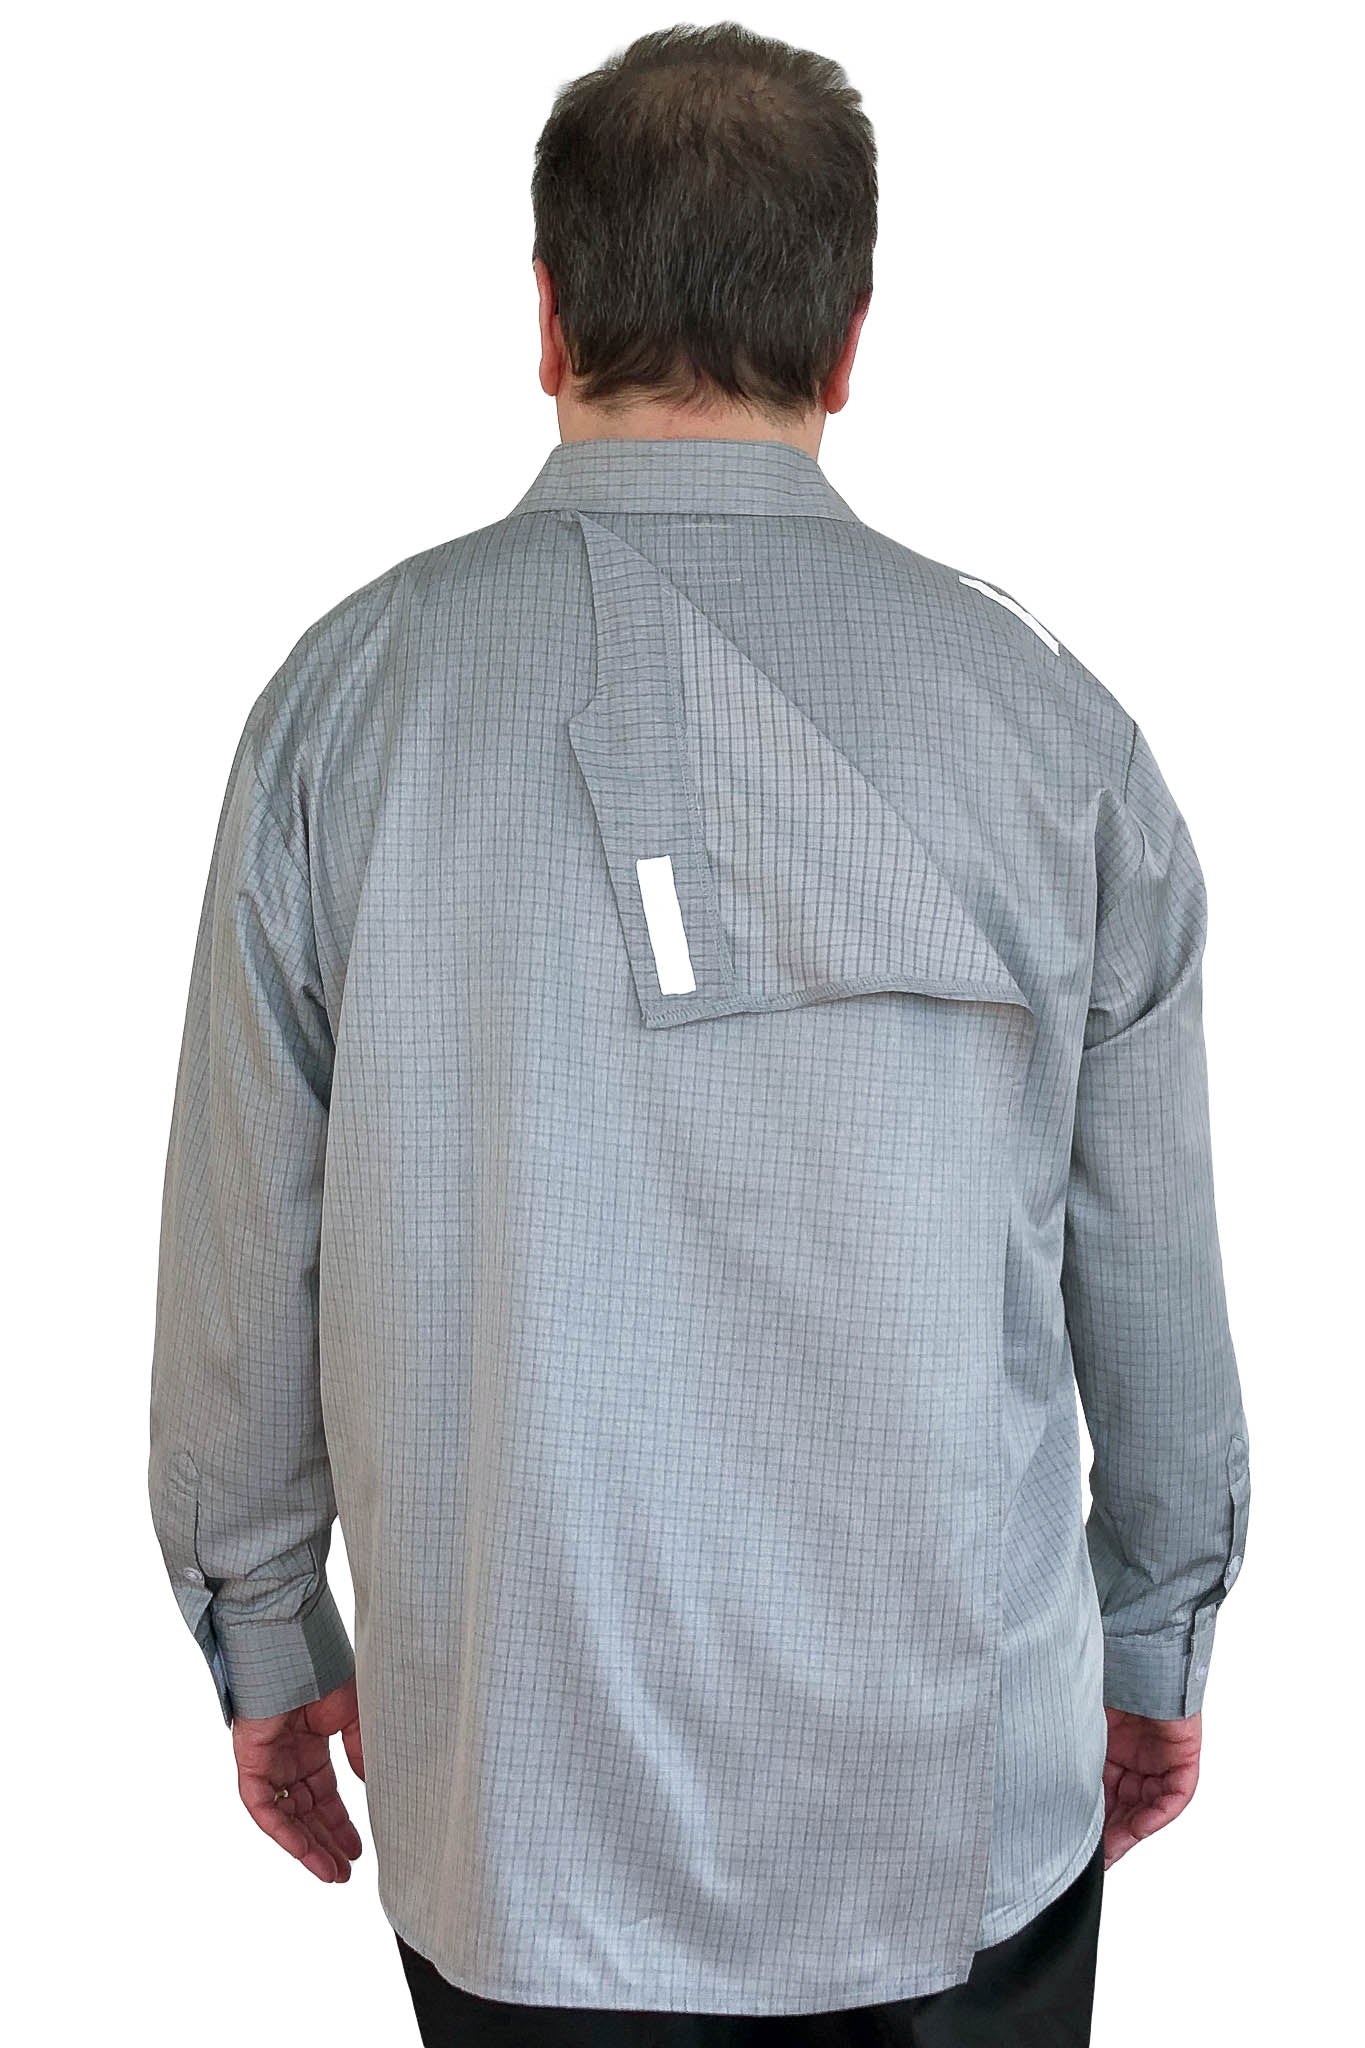 Sport Shirt for Men - Grey | Martin | Adaptive Clothing by Ovidis